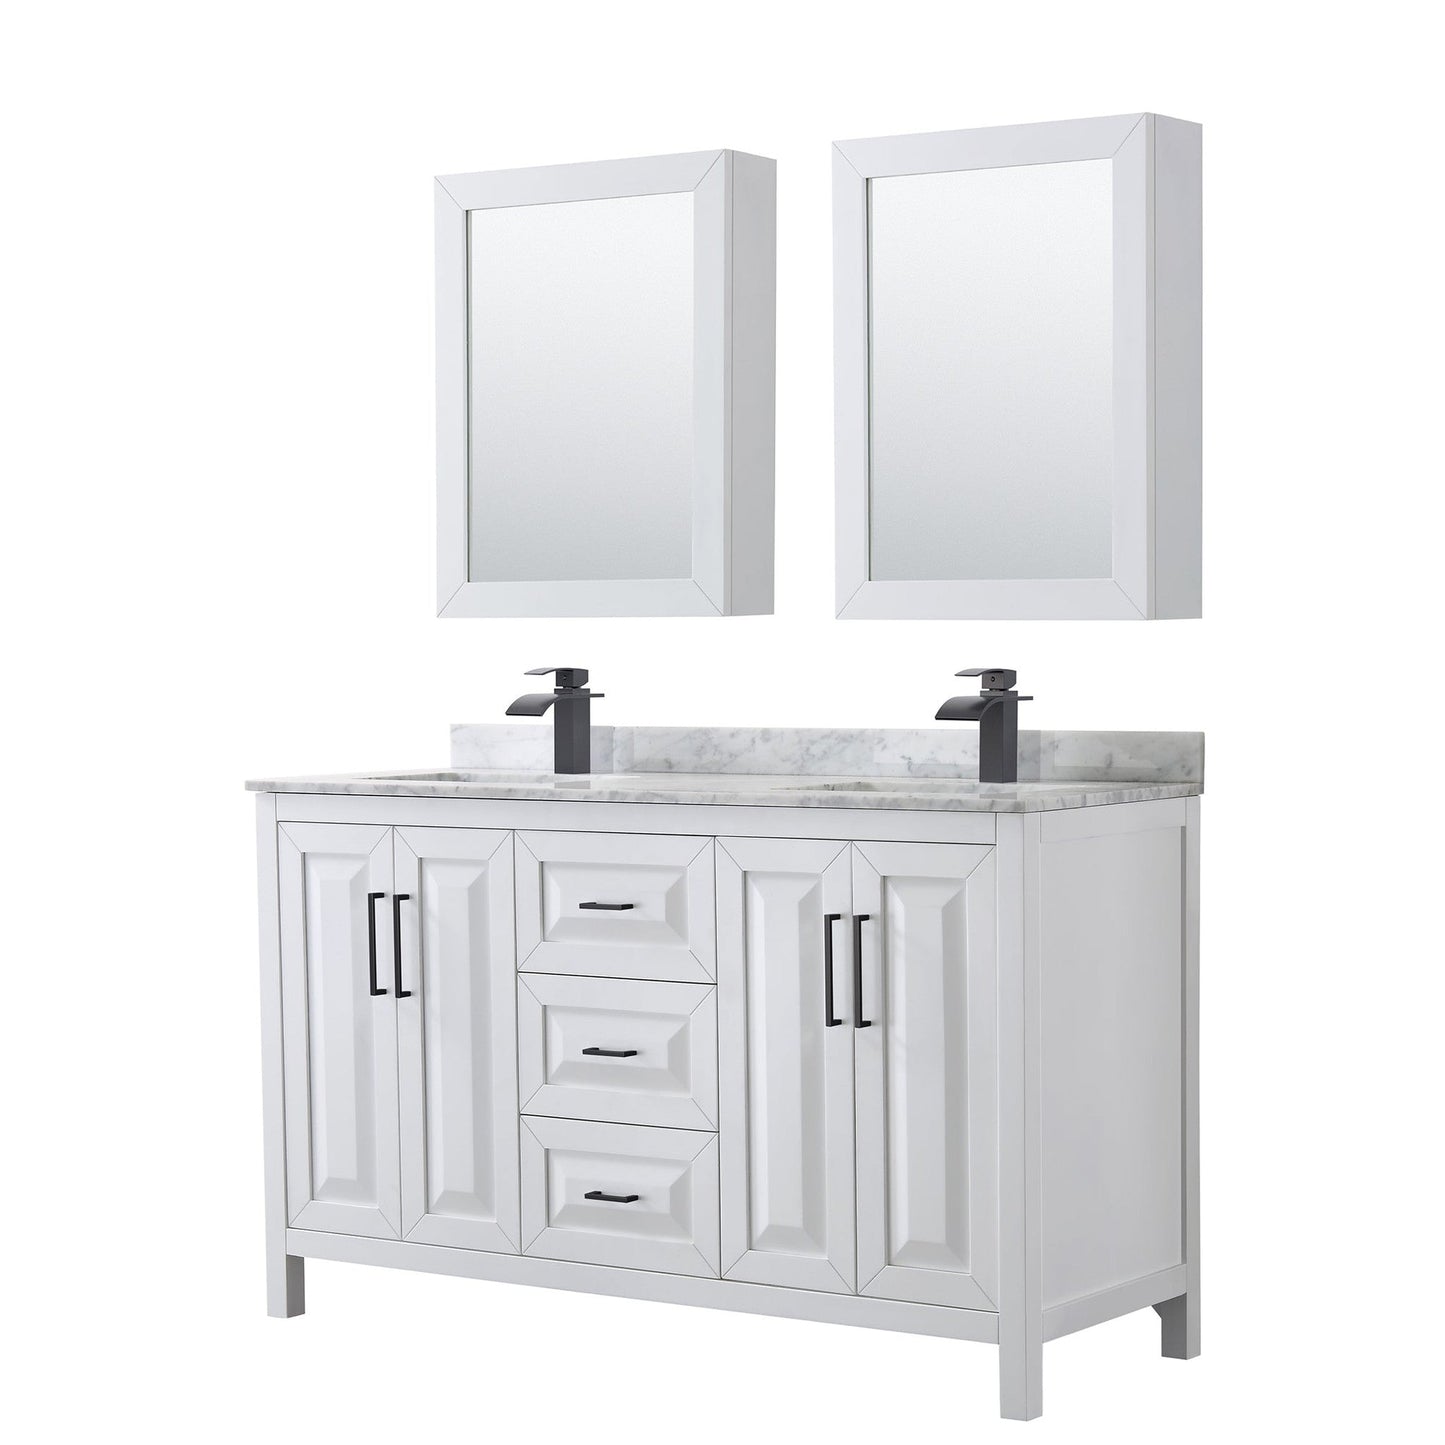 Daria 60" Double Bathroom Vanity in White, White Carrara Marble Countertop, Undermount Square Sinks, Matte Black Trim, Medicine Cabinets